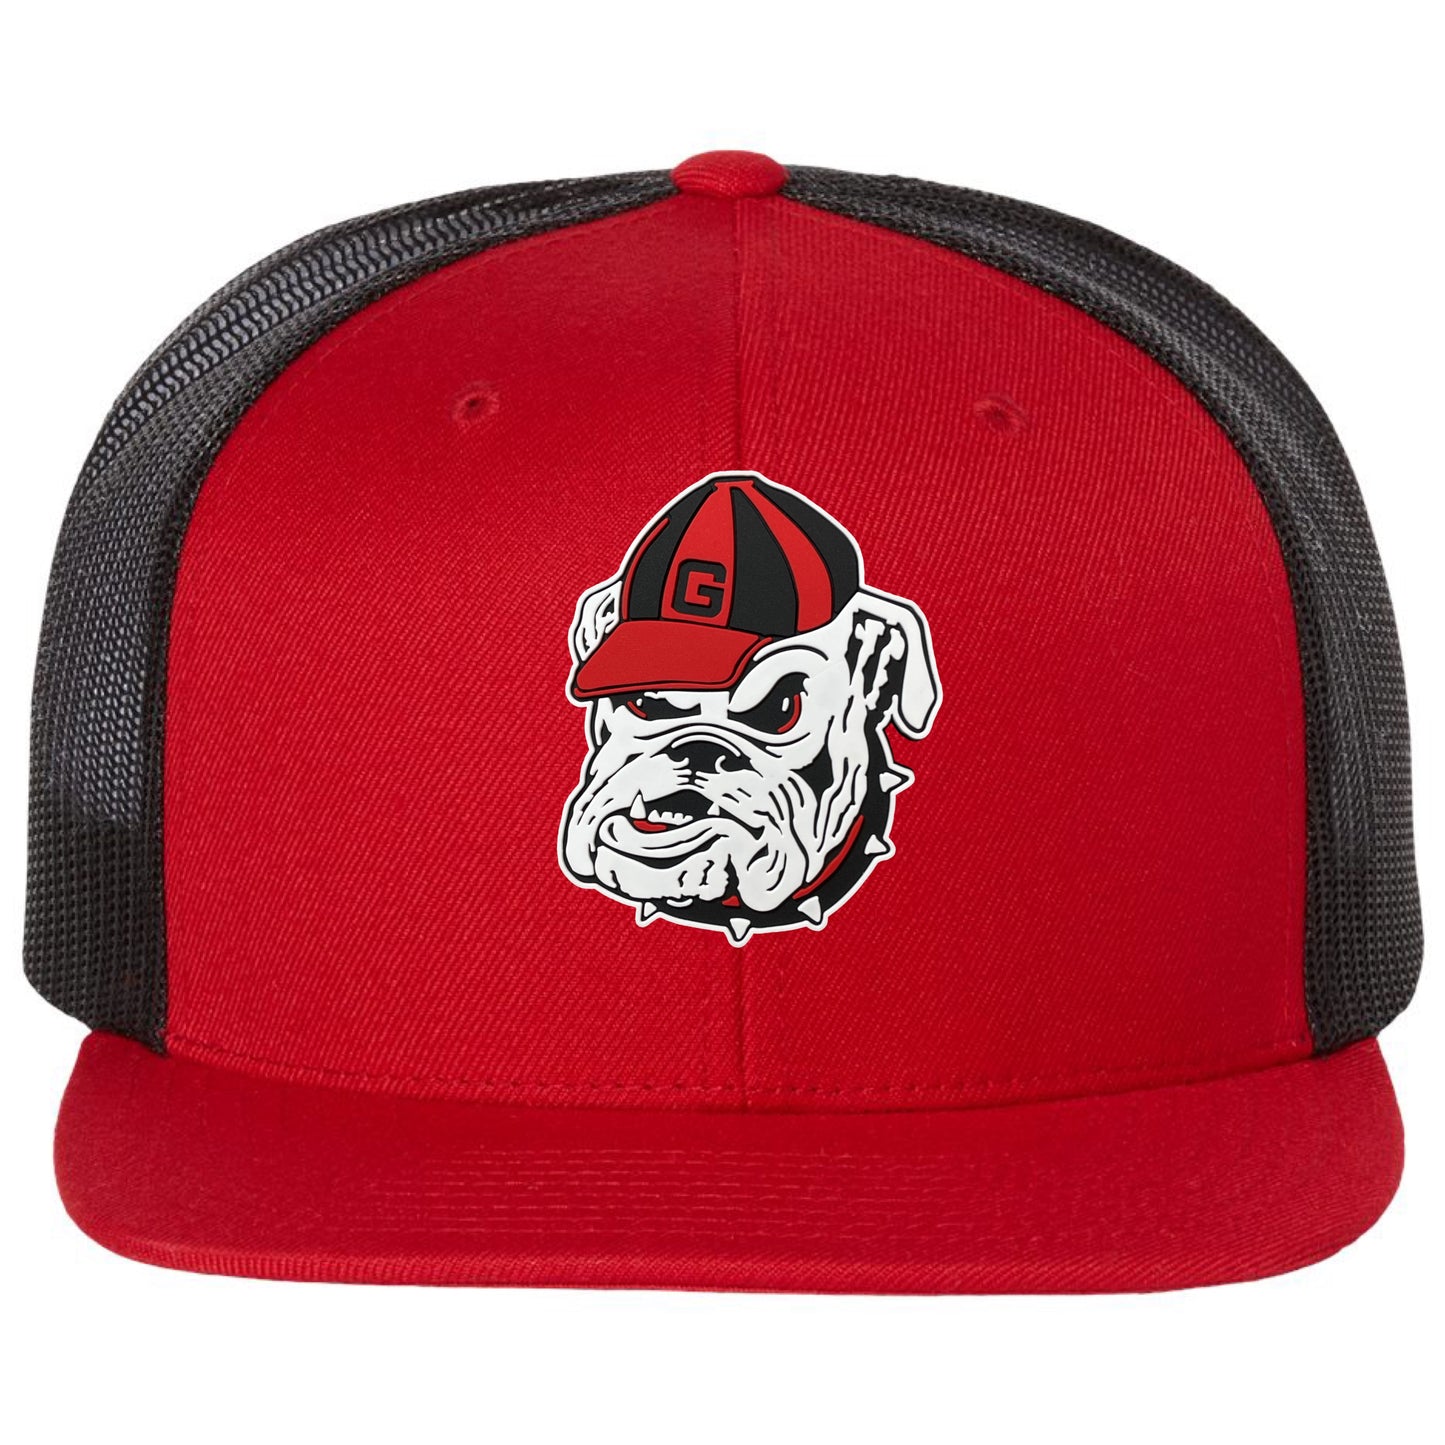 Georgia Bulldogs Vintage 3D Logo Wool Blend Flat Bill Hat- Red/ Black - Ten Gallon Hat Co.